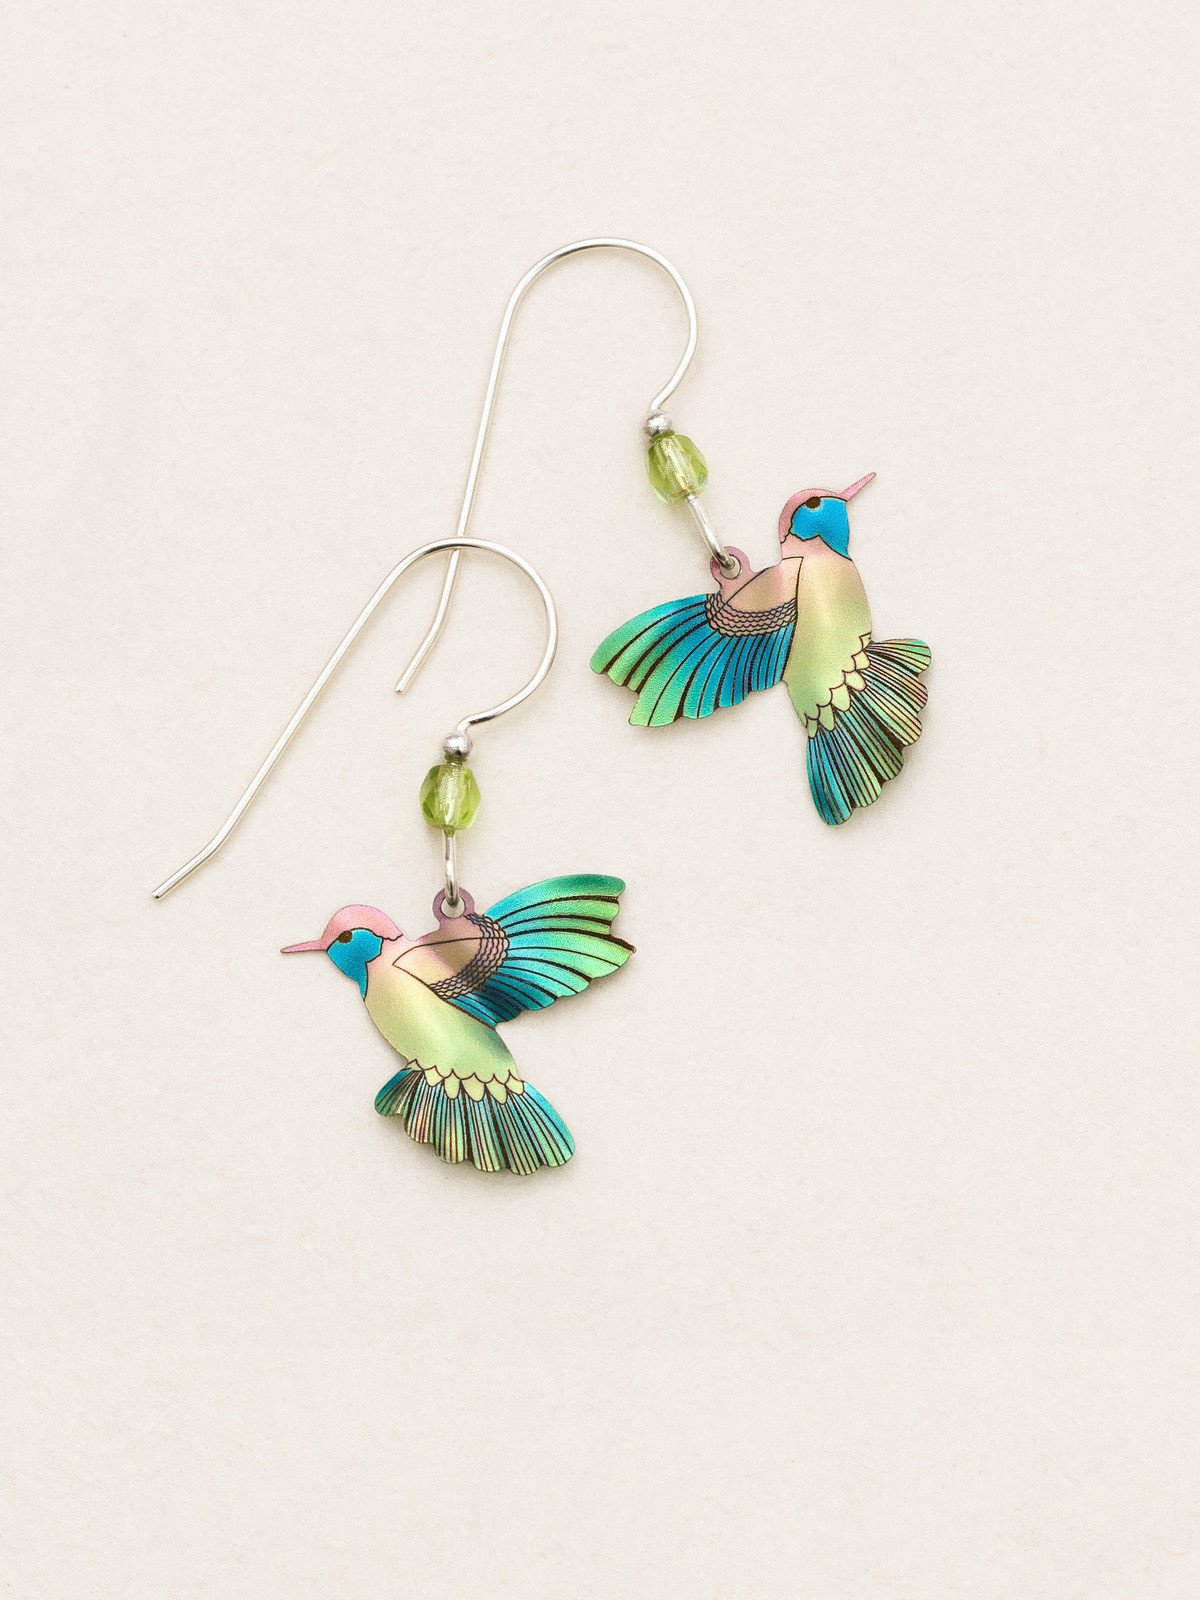 Hummingbird earrings by jewelry designer Holly Yashi